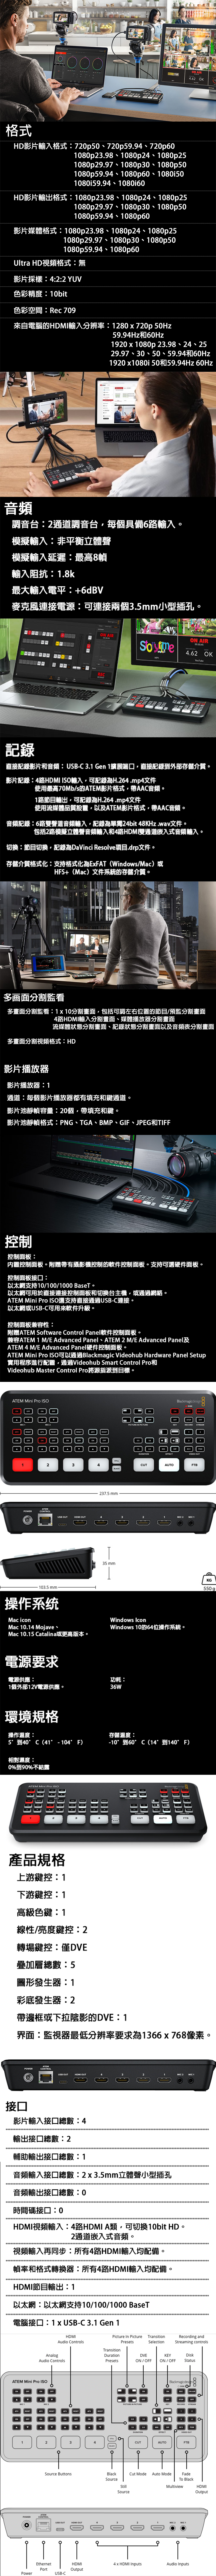 Blackmagic ATEM Mini Pro ISO